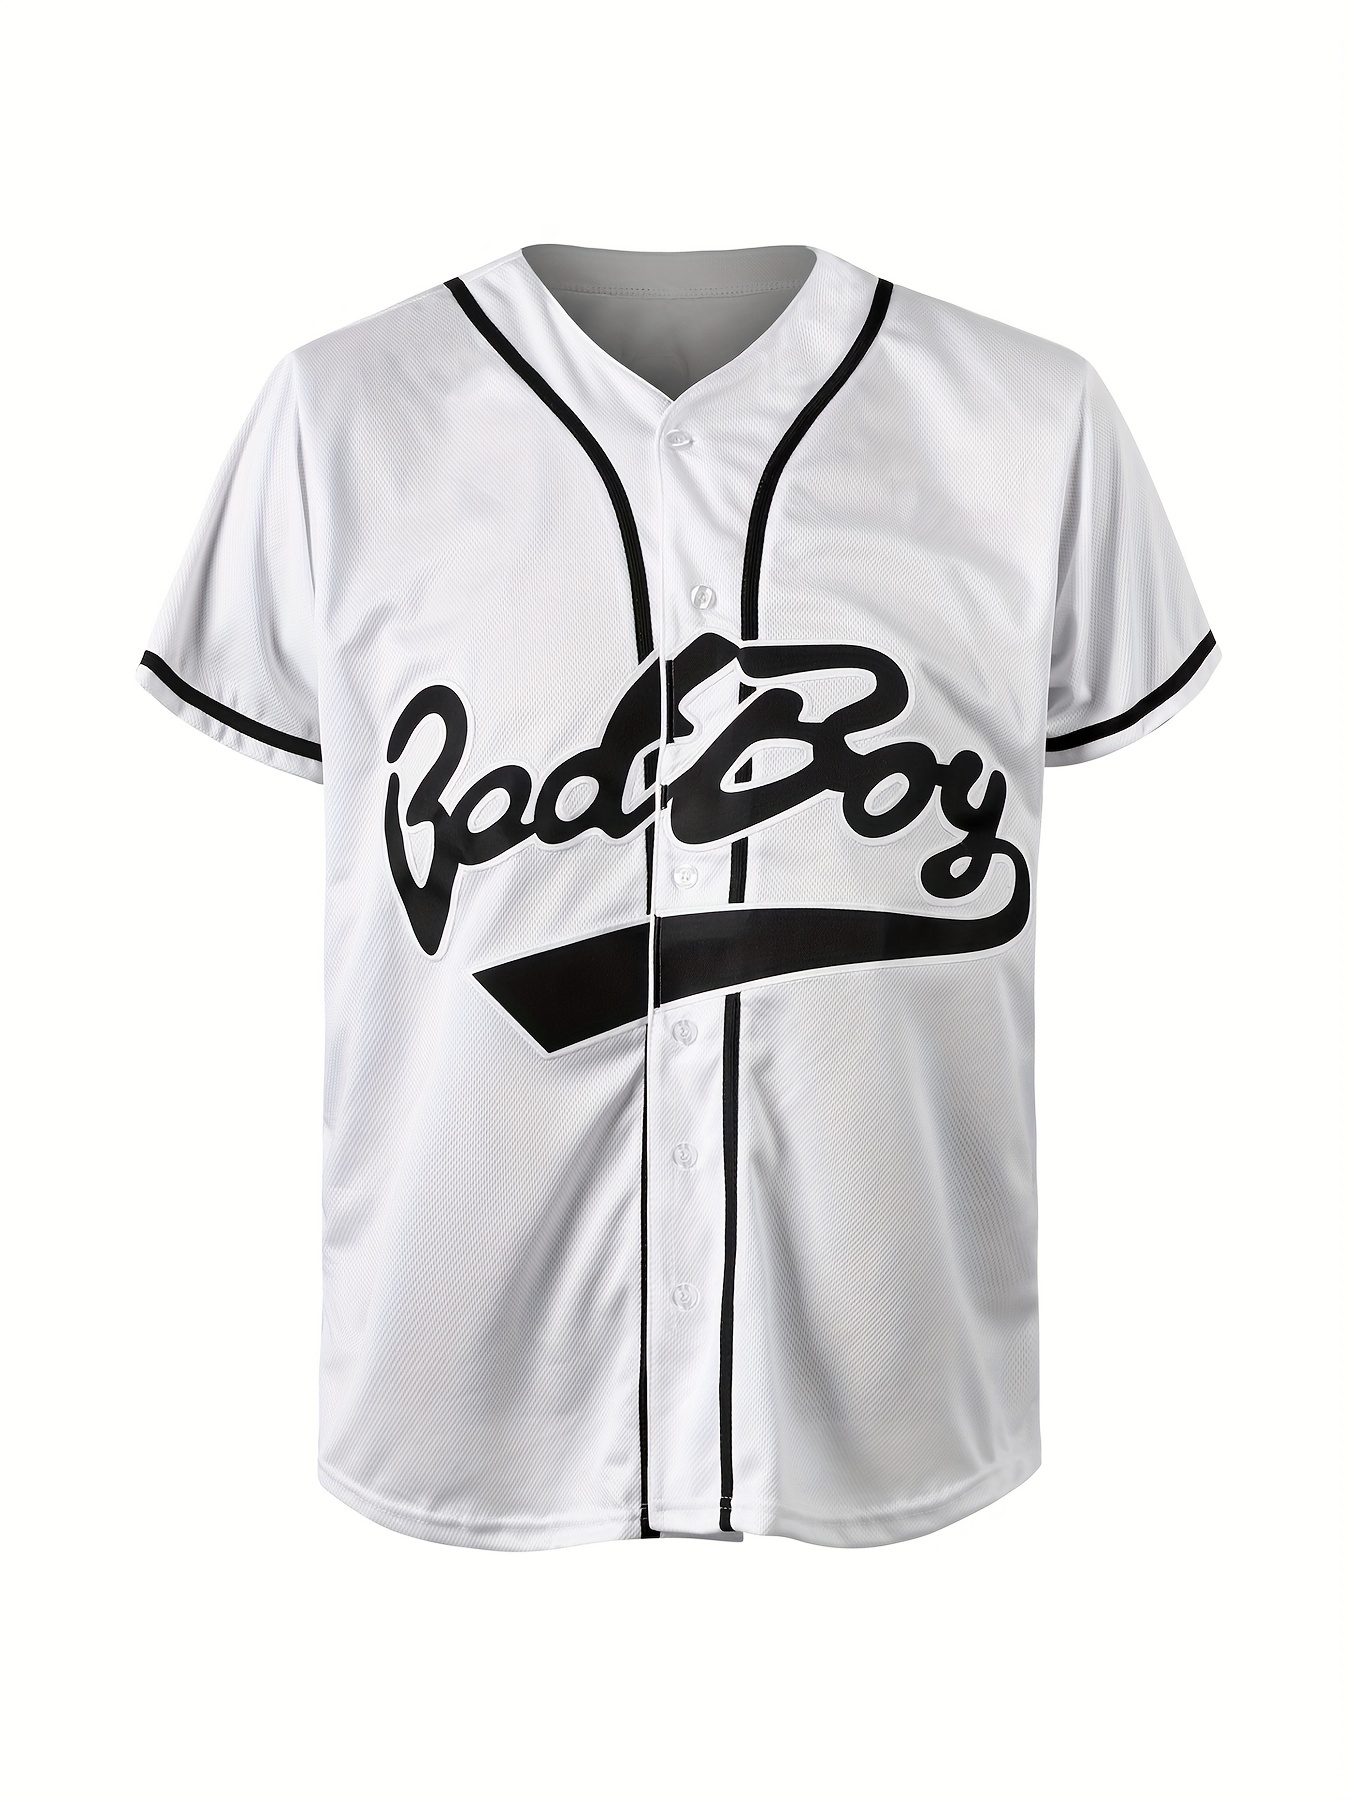  Bad Boy Jersey, 10 Biggie Stripe Clothing for Men Women, 90s  Hip Hop Baseball Shirts Jersey, Baseball Jerseys Dress : Clothing, Shoes &  Jewelry